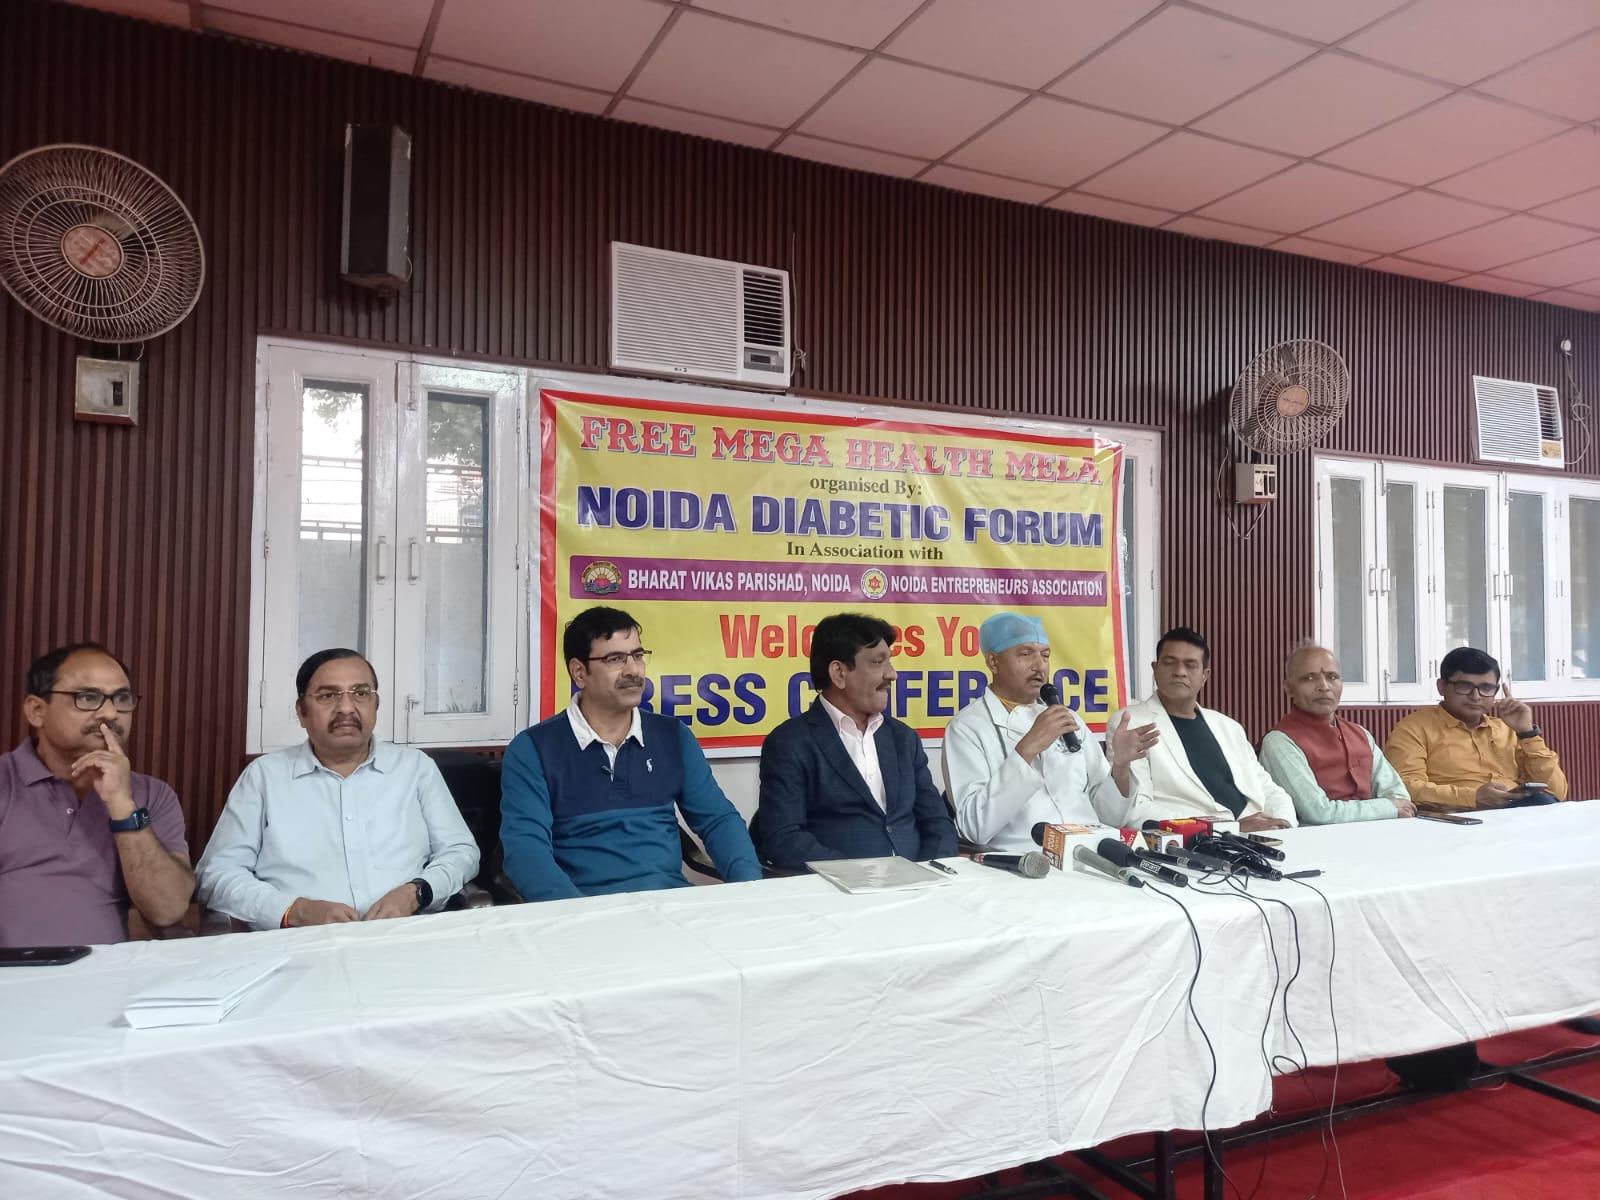 Noida news : नोएडा डायबिटिक फोरम लगायेगा मेगा हेल्थ कैंप